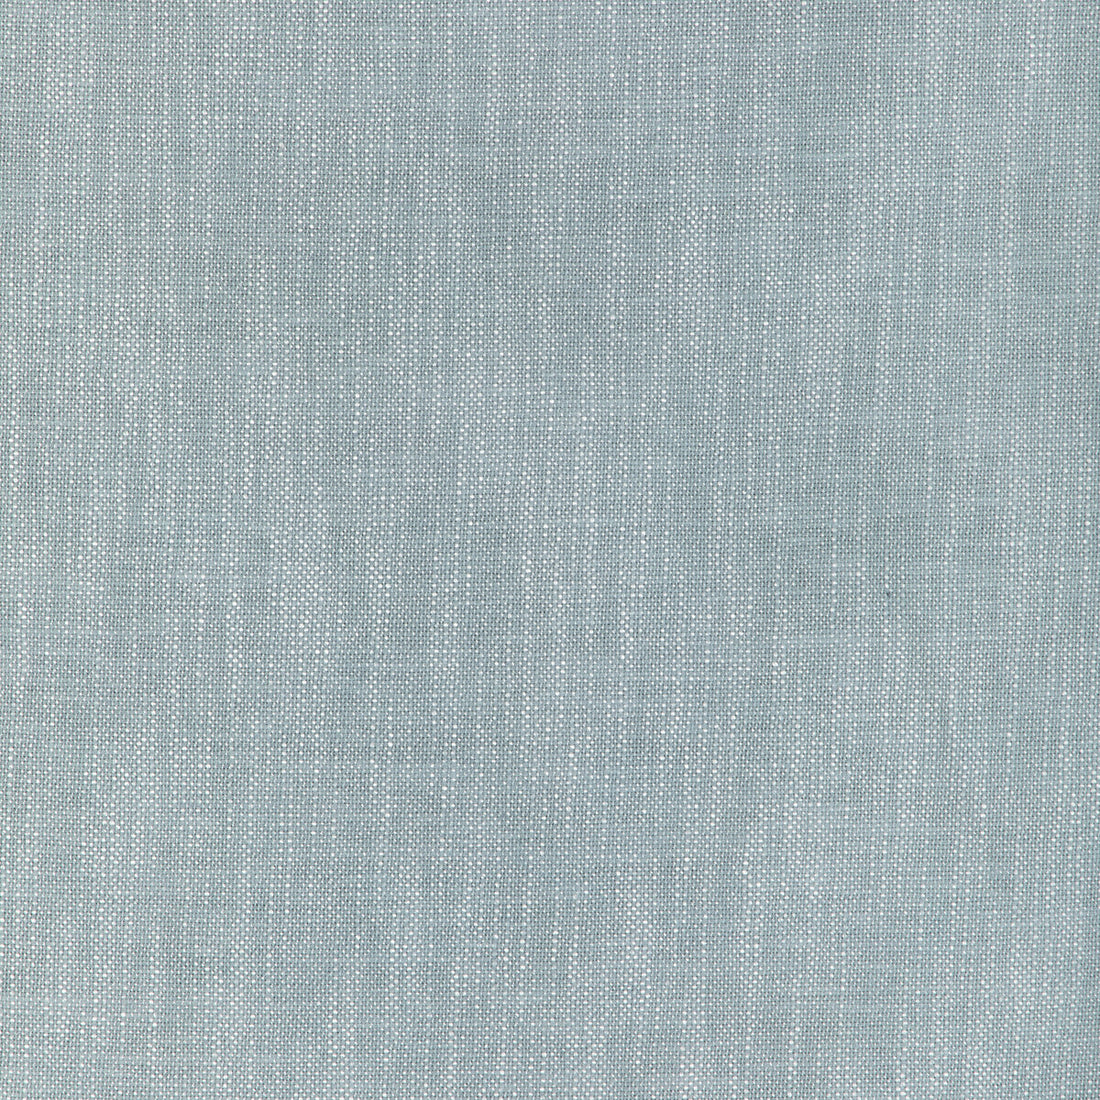 Kravet Smart fabric in 36672-135 color - pattern 36672.135.0 - by Kravet Smart in the Performance Kravetarmor collection